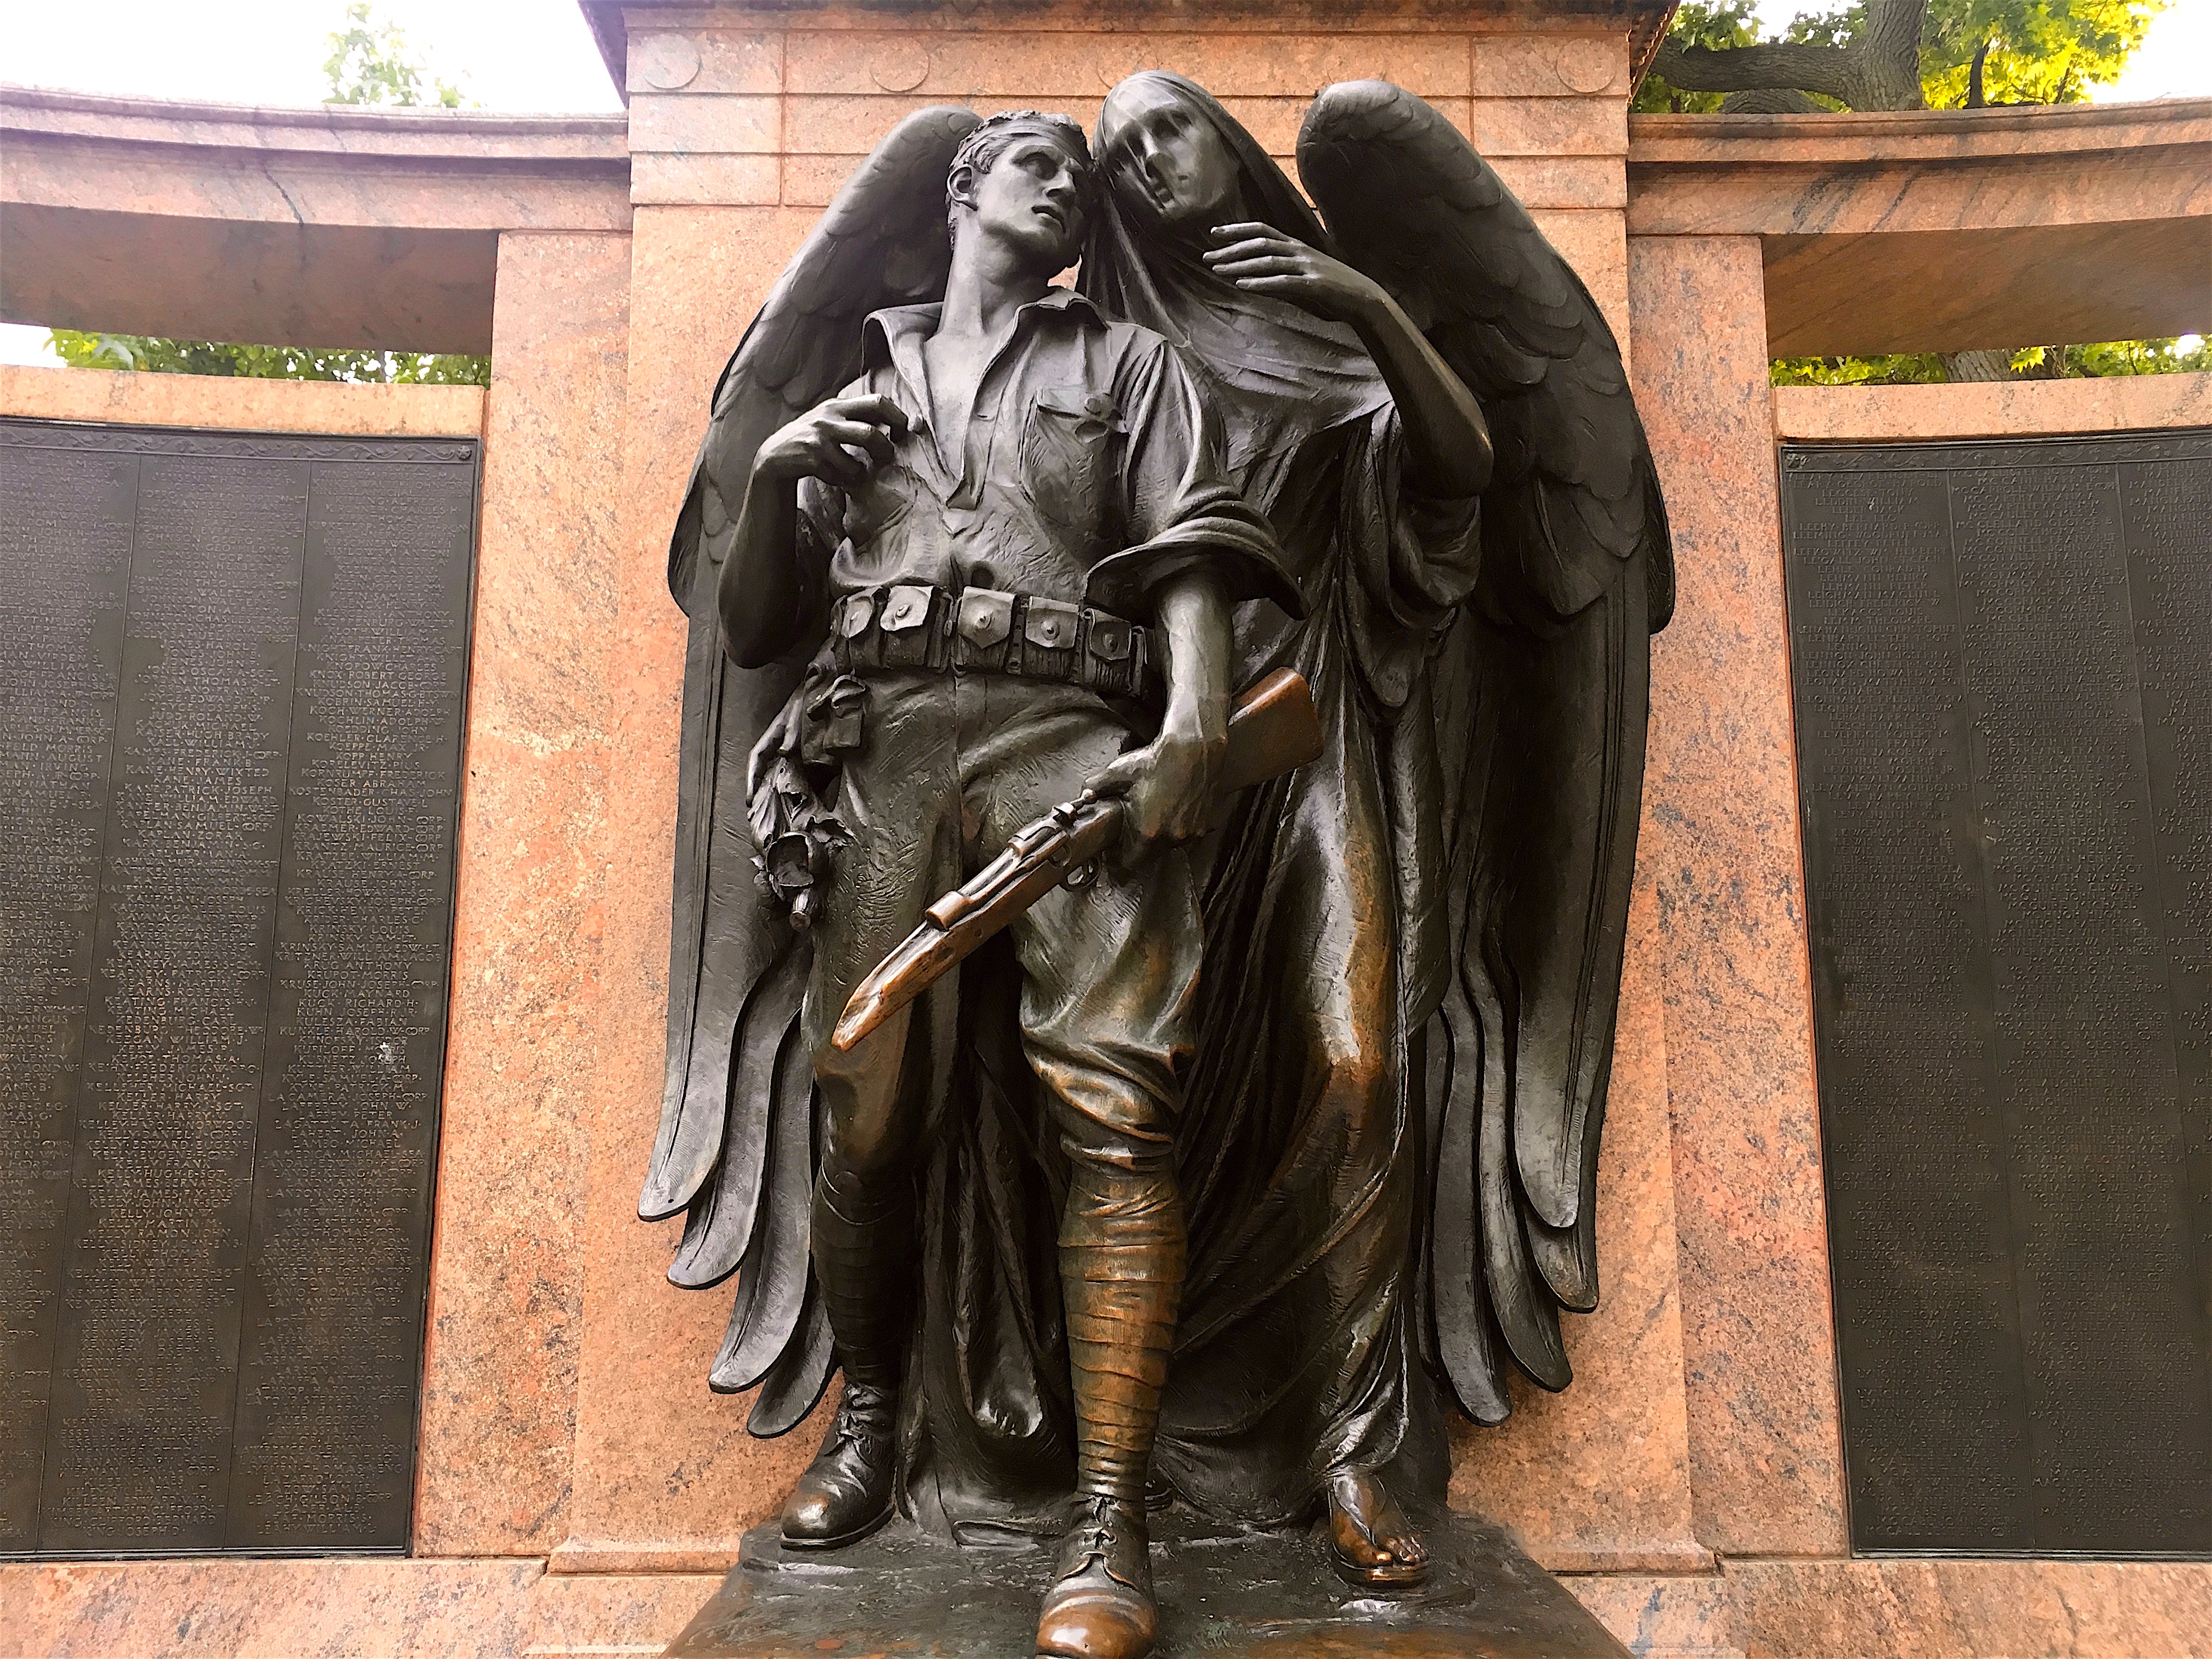 The somber “Angel of Death” in Prospect Park | Ephemeral New York